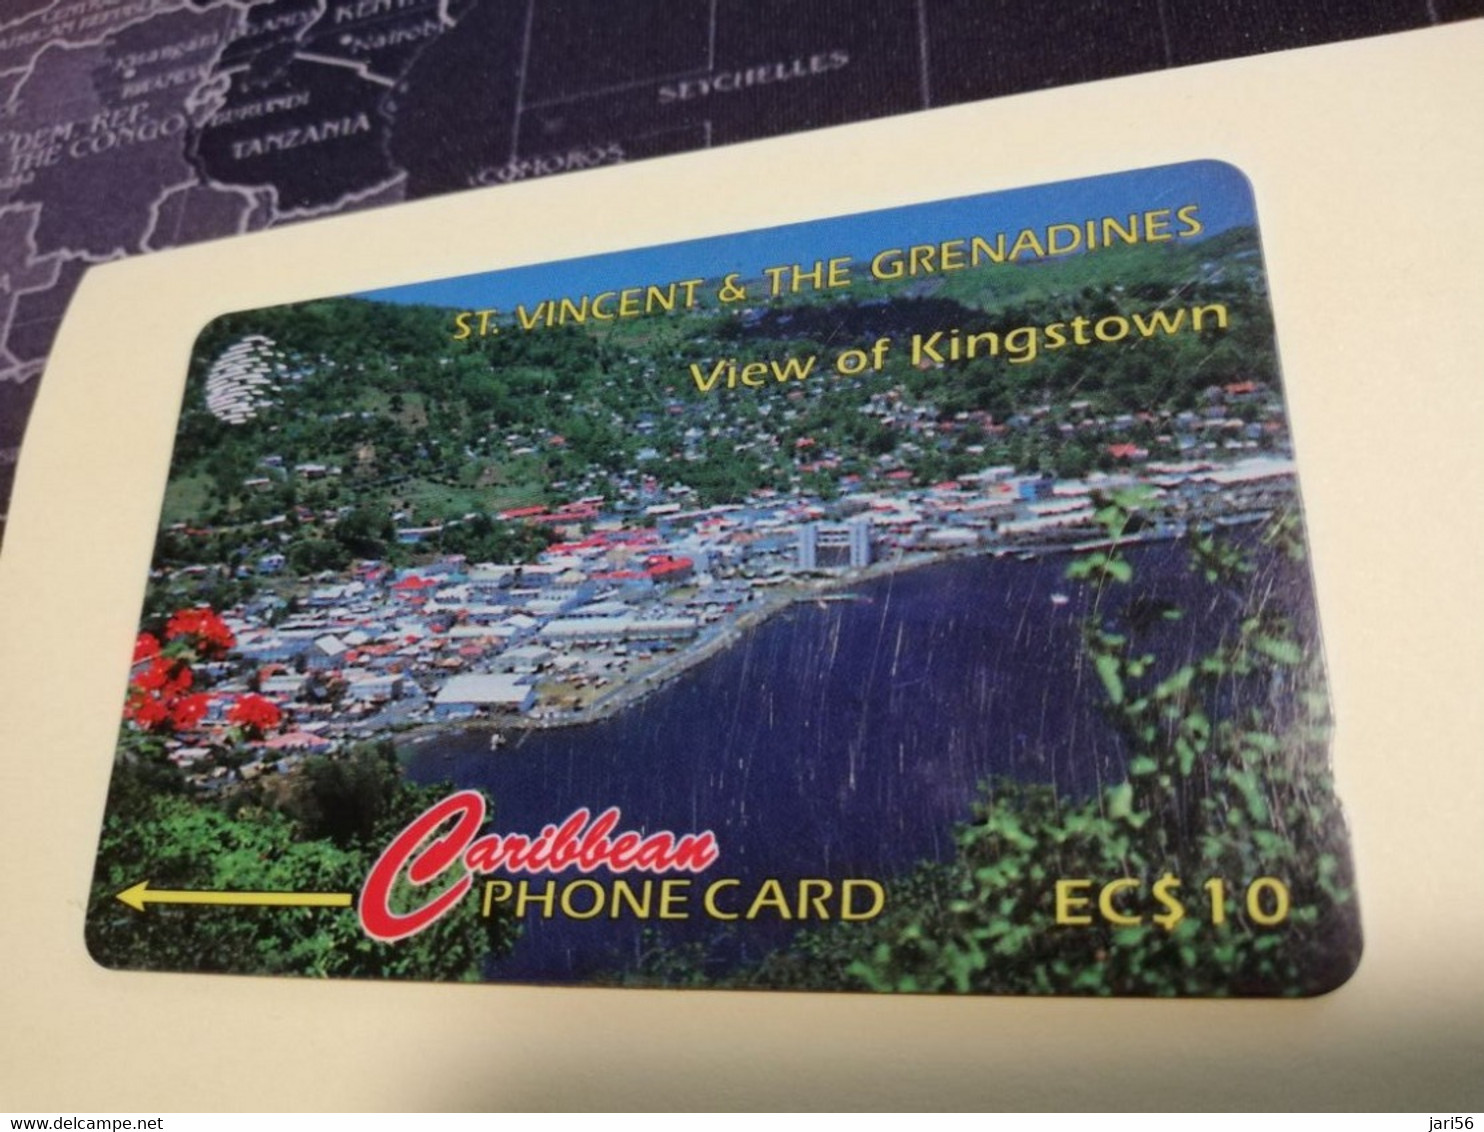 ST VINCENT & GRENADINES  GPT CARD   $ 10,- 13CSVB  VIEW OF KINGSTOWN            C&W    Fine Used  Card  **3372** - Saint-Vincent-et-les-Grenadines